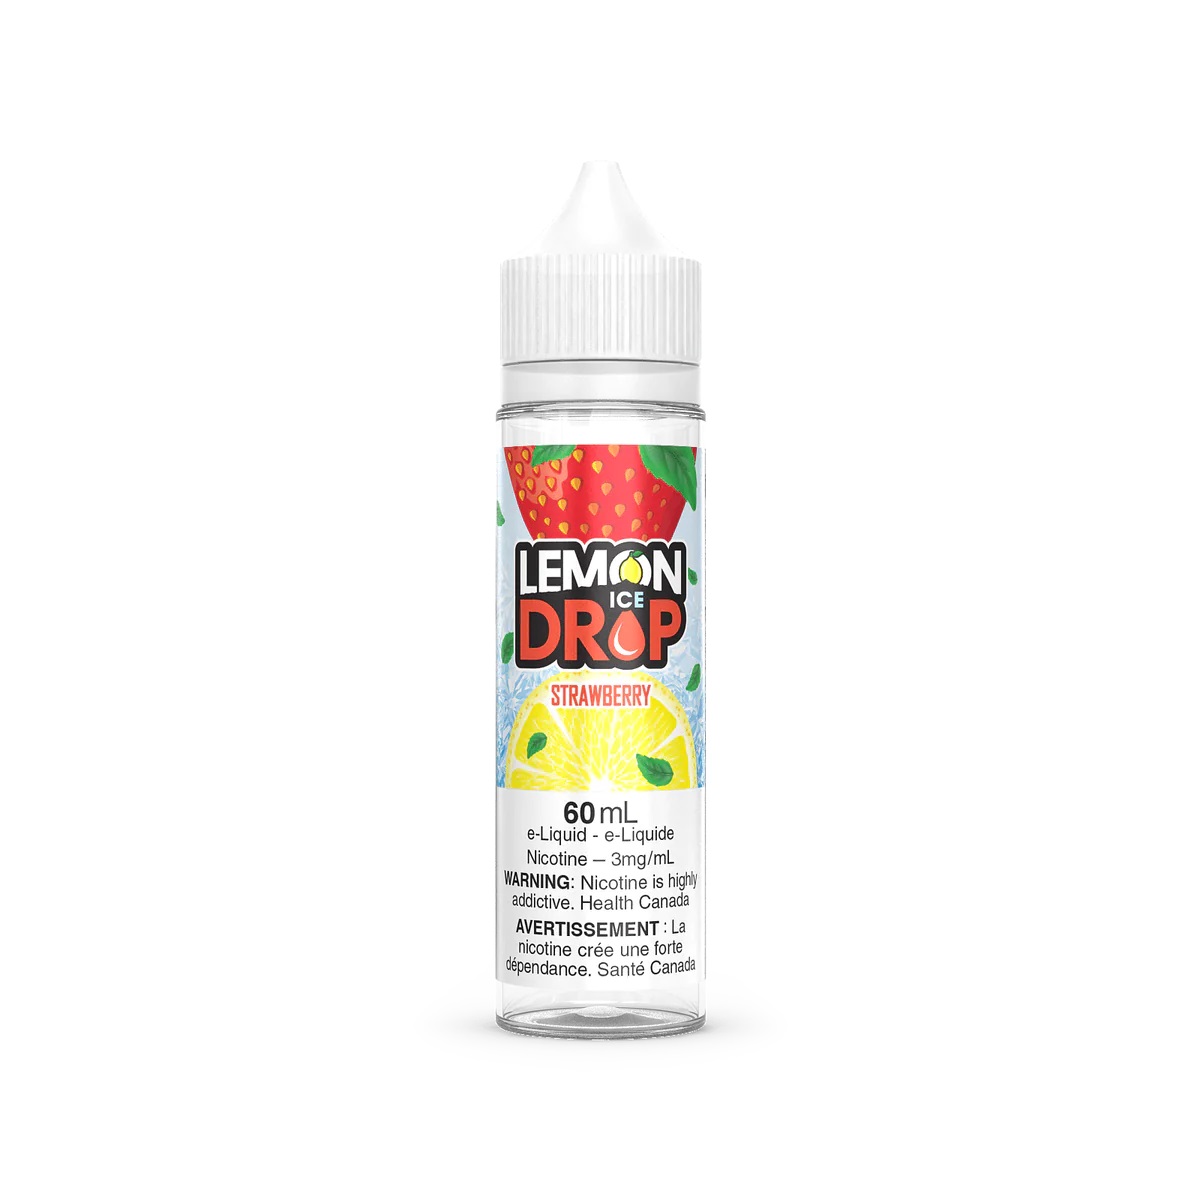 Lemon Drop Ice - Strawberry - 60ml